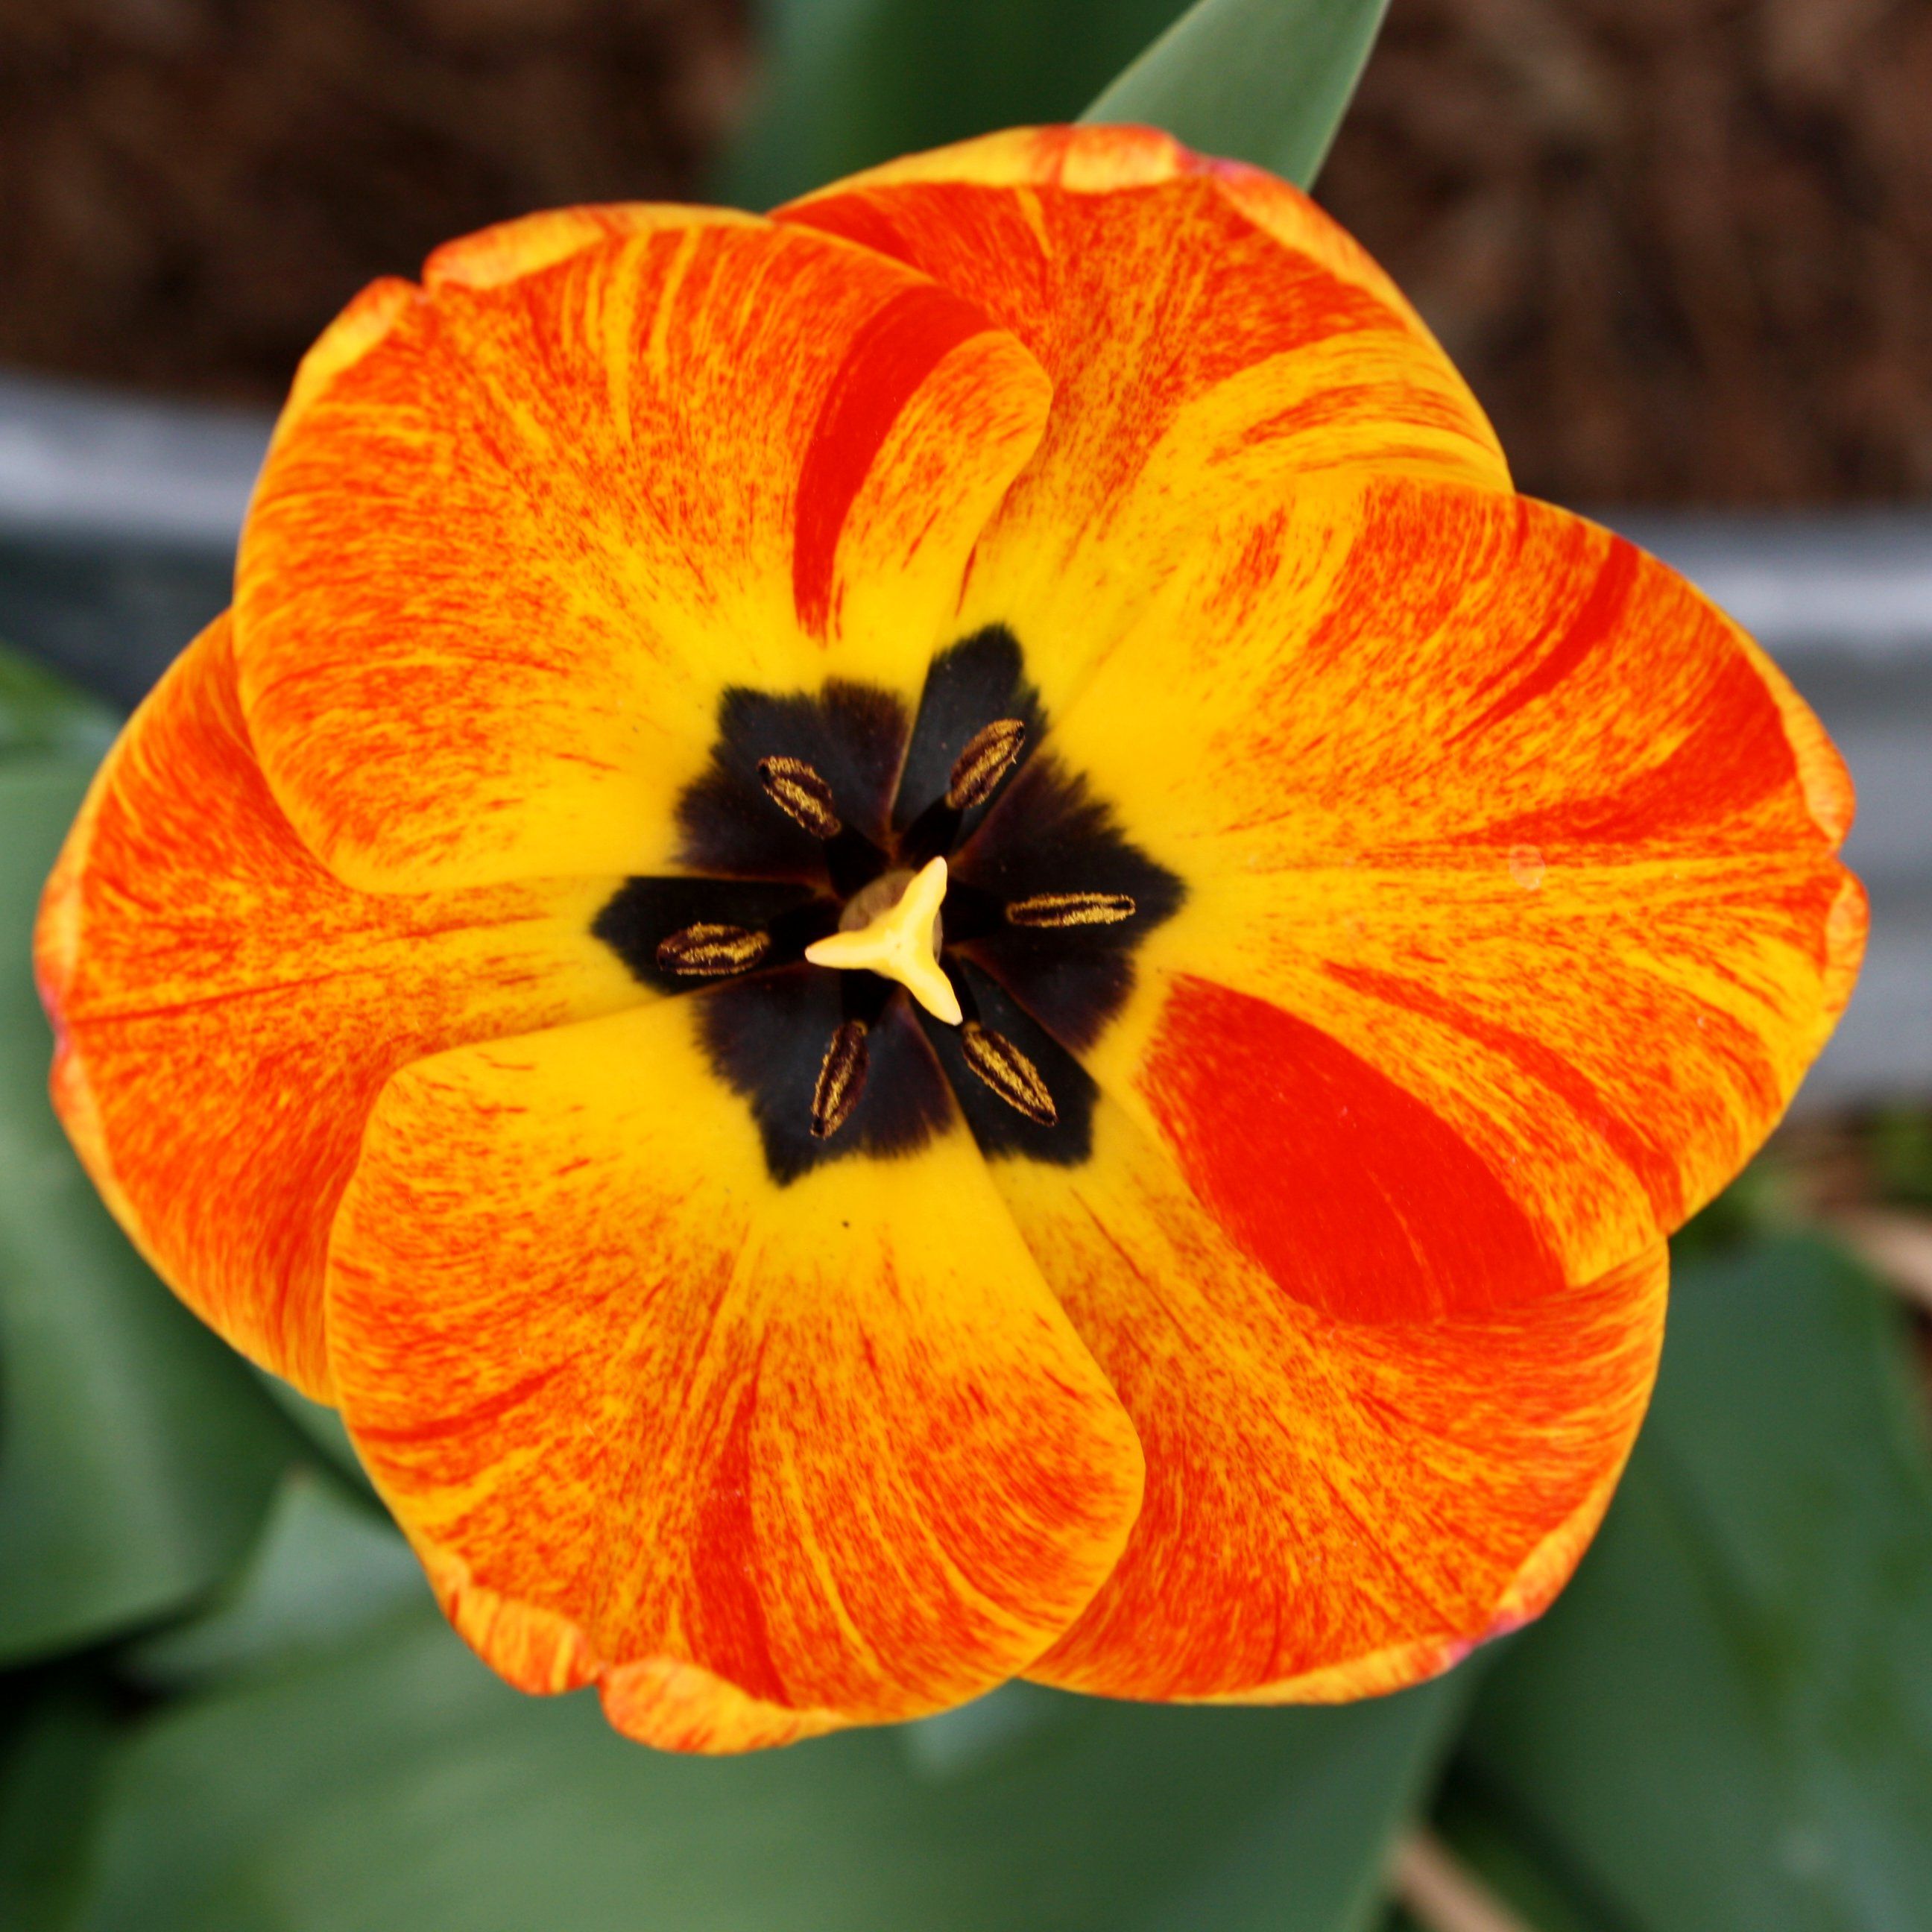 flowers upclose | Orange Flame Tulip Flower Close Up - Free High ...